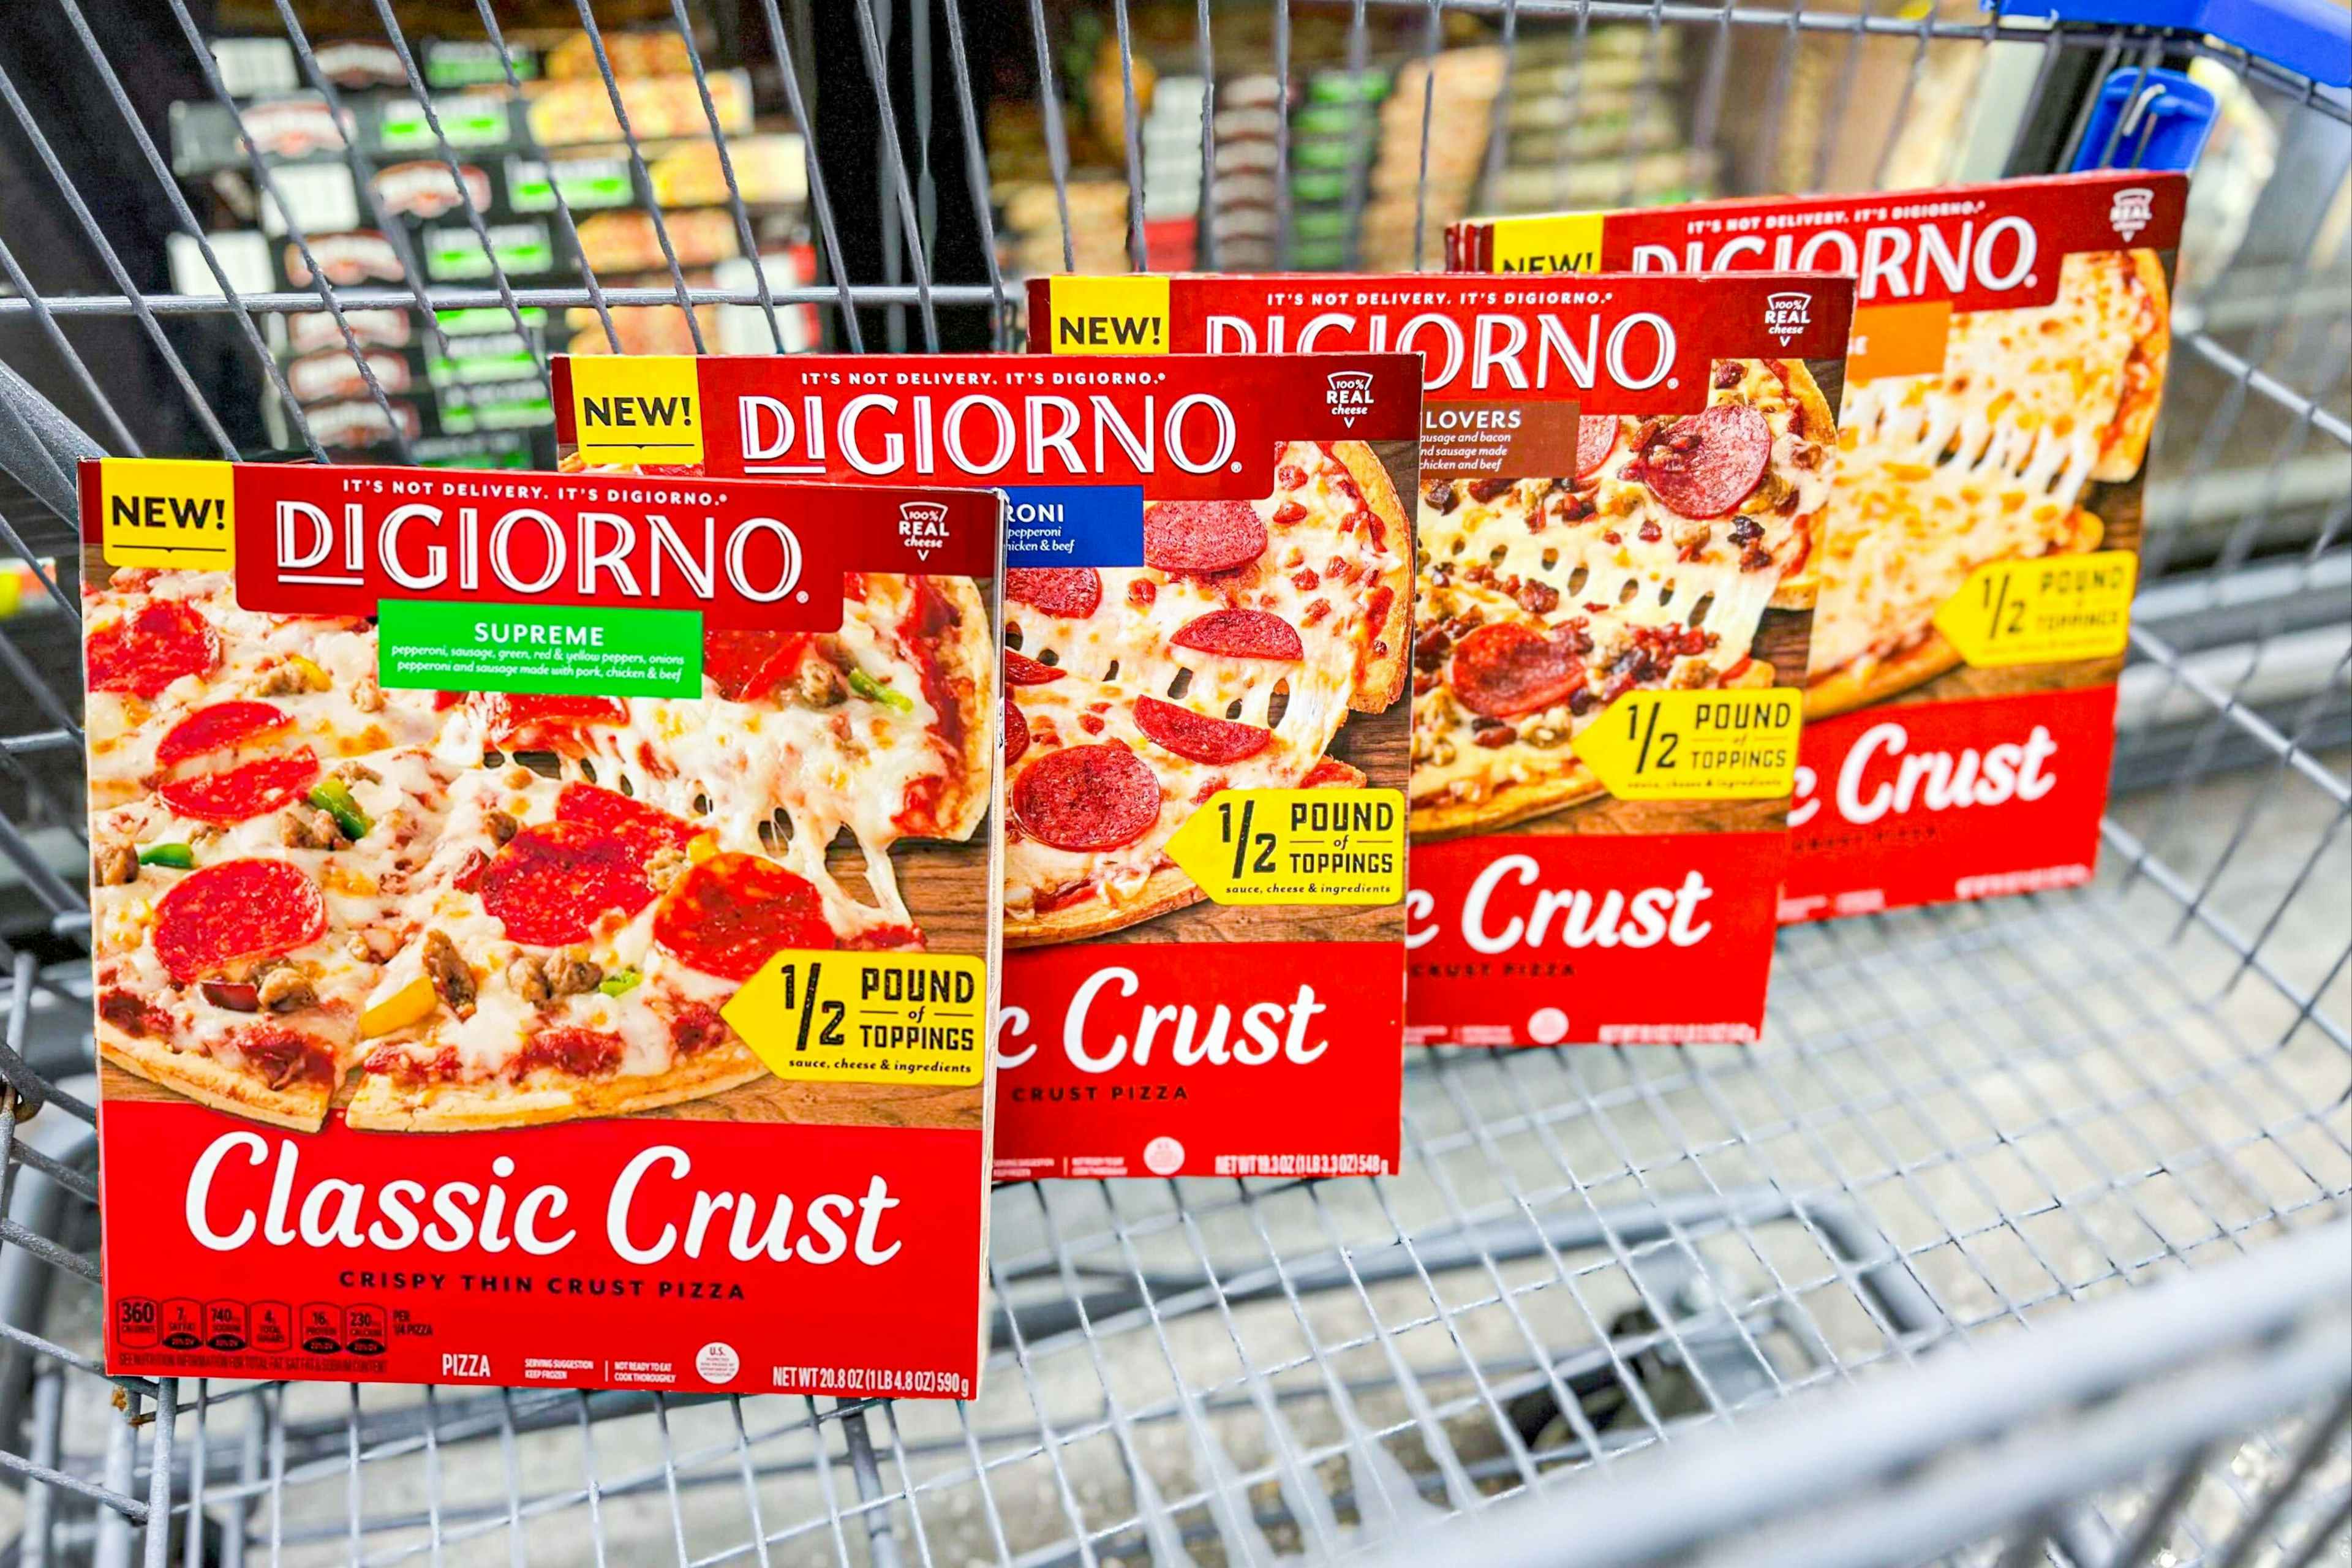 4 Classic Crust DiGiorno pizzas in a Walmart cart